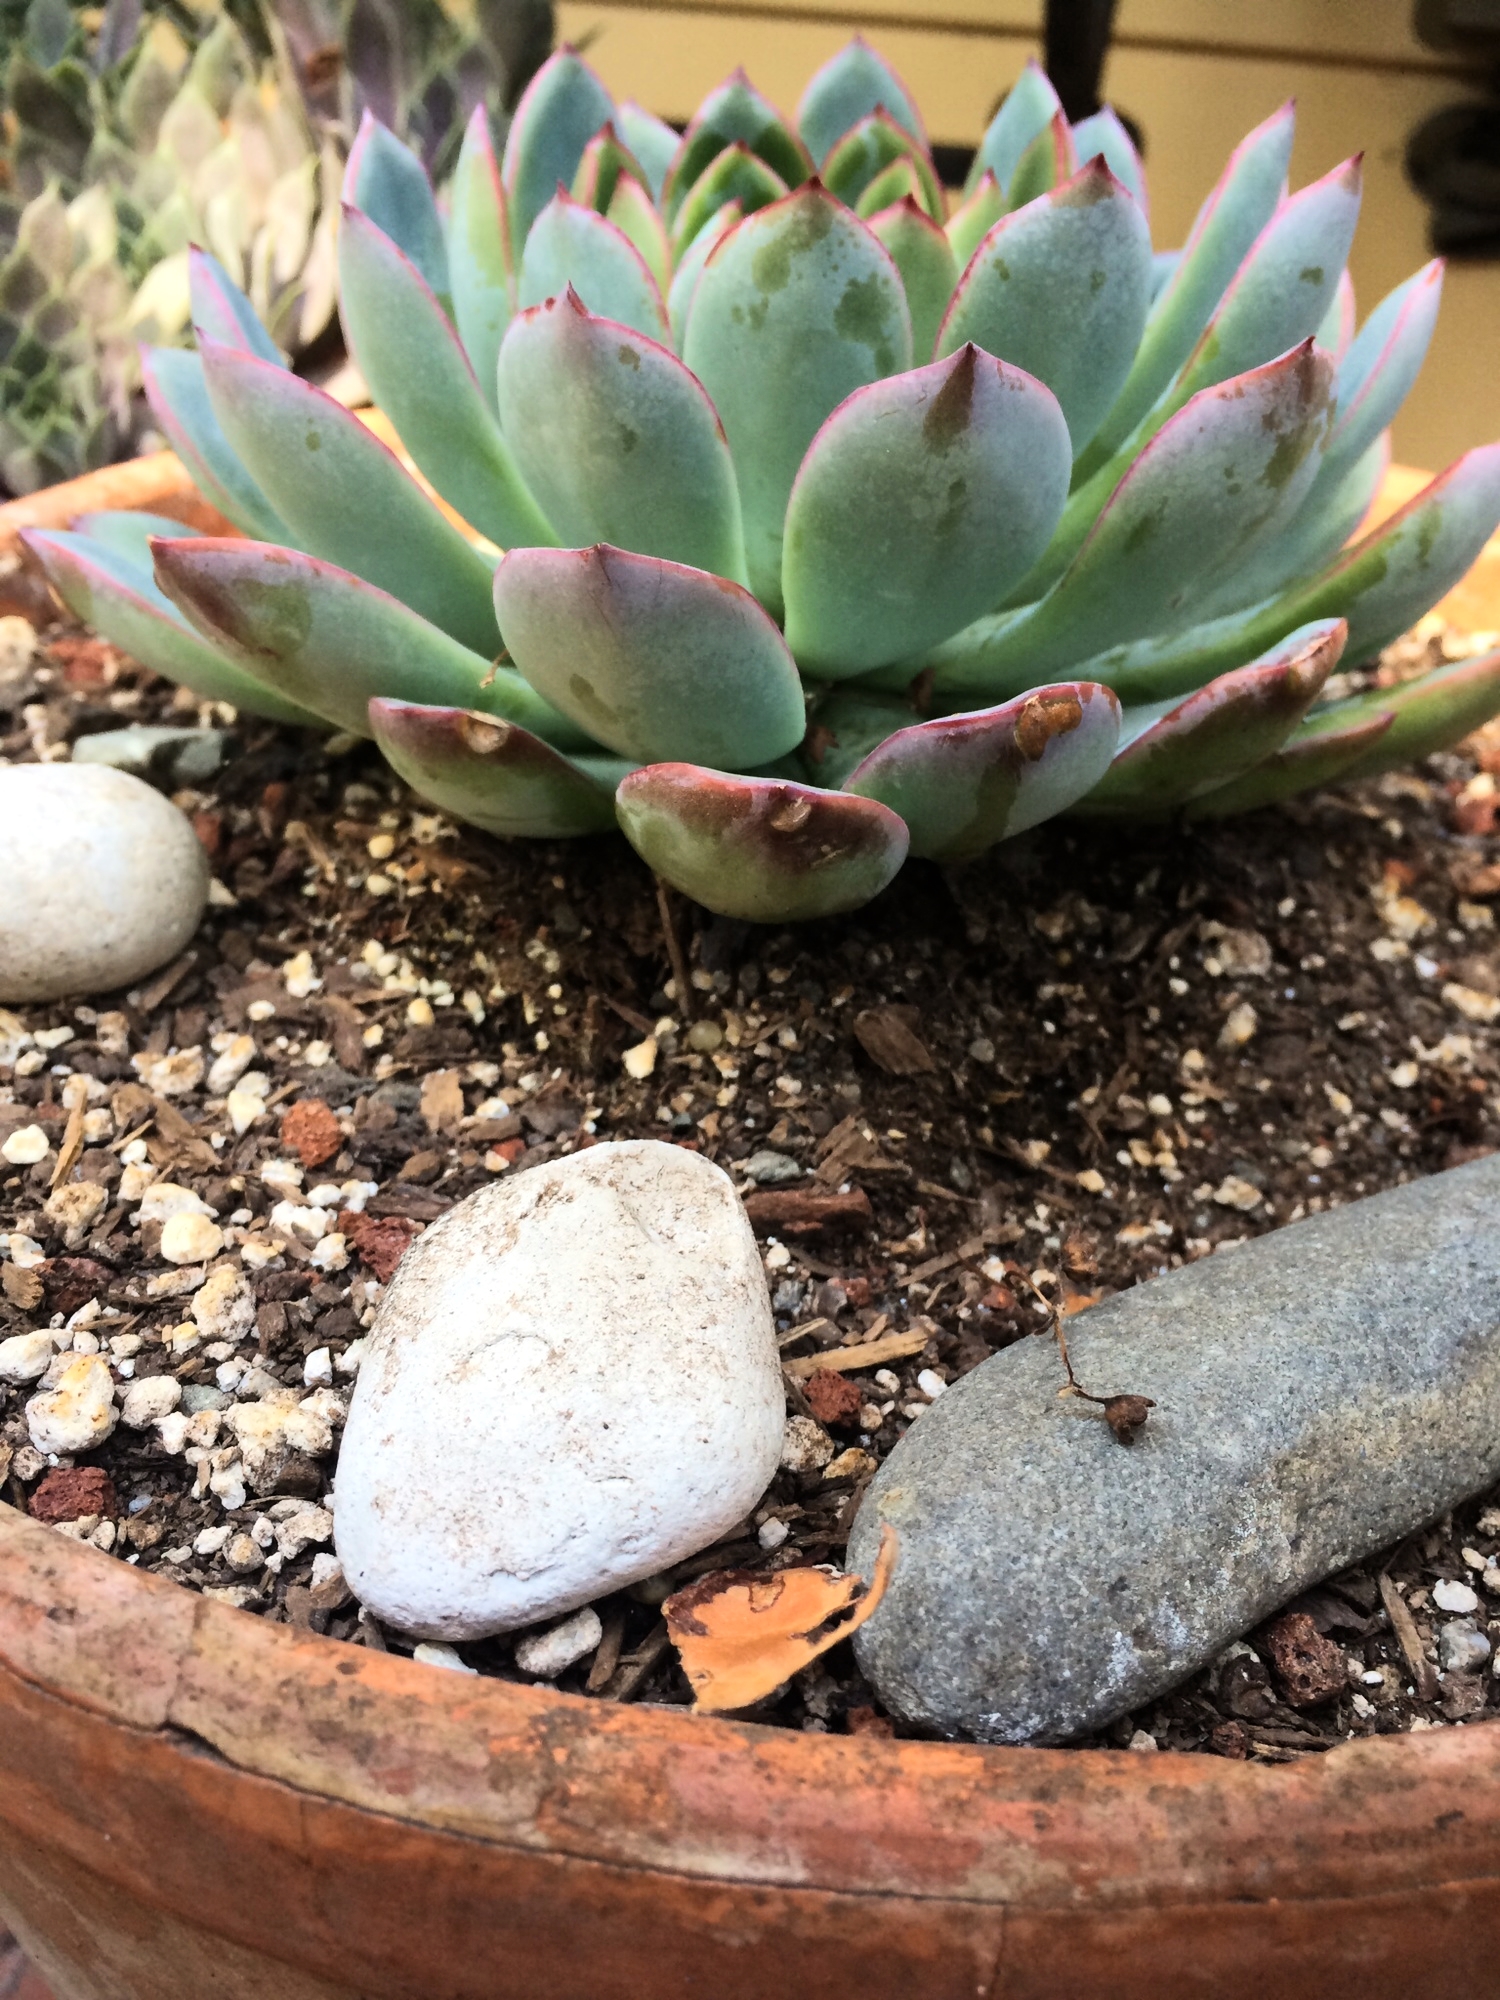  Established California | Habitat | Succulent Love Affair | Add some rocks